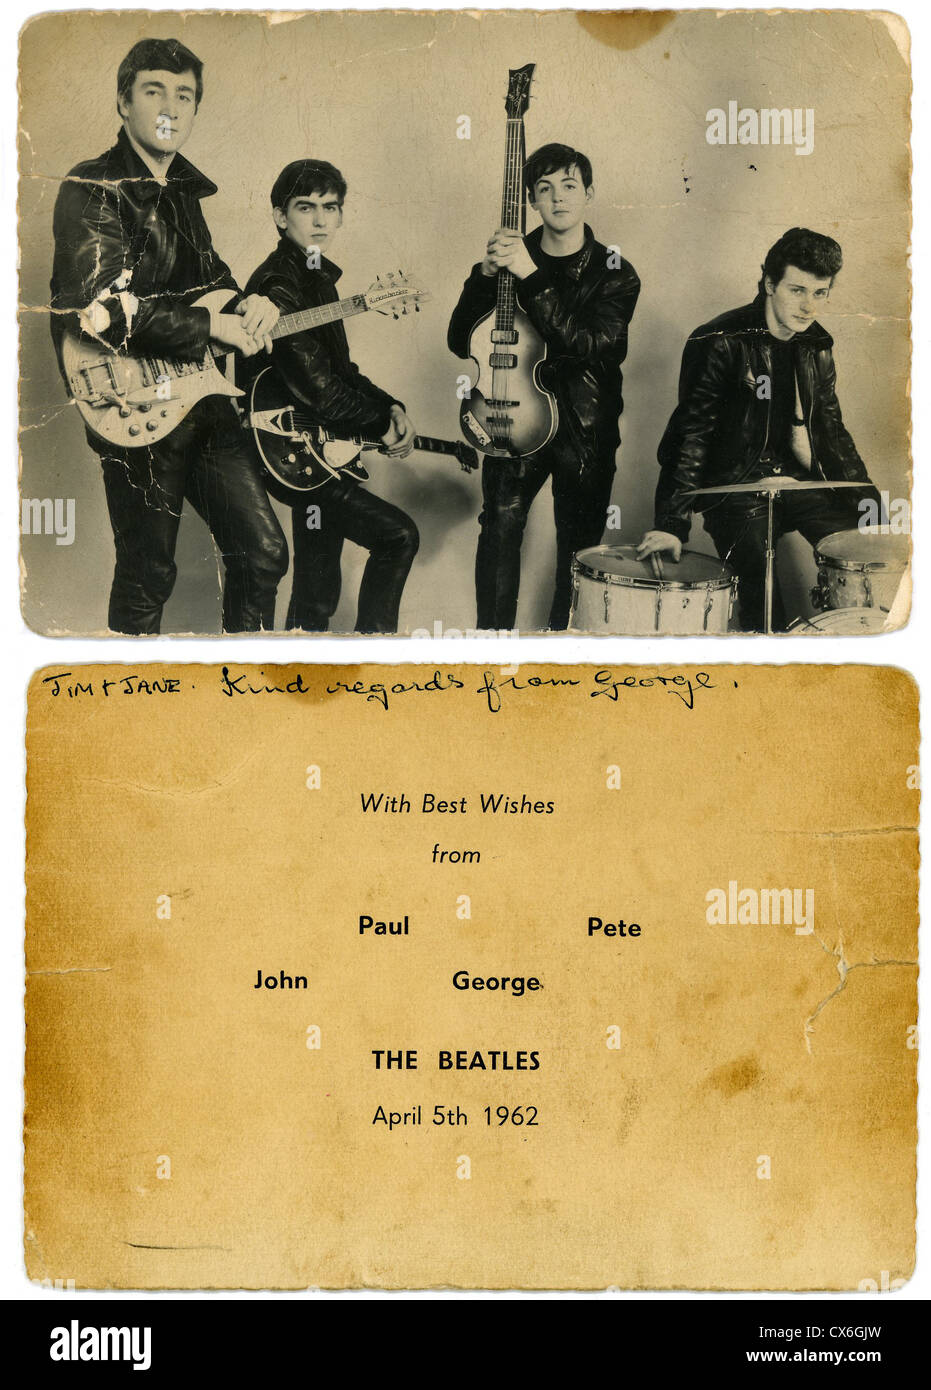 000498 - los Beatles a principios de 1962 tarjeta promocional Foto de stock